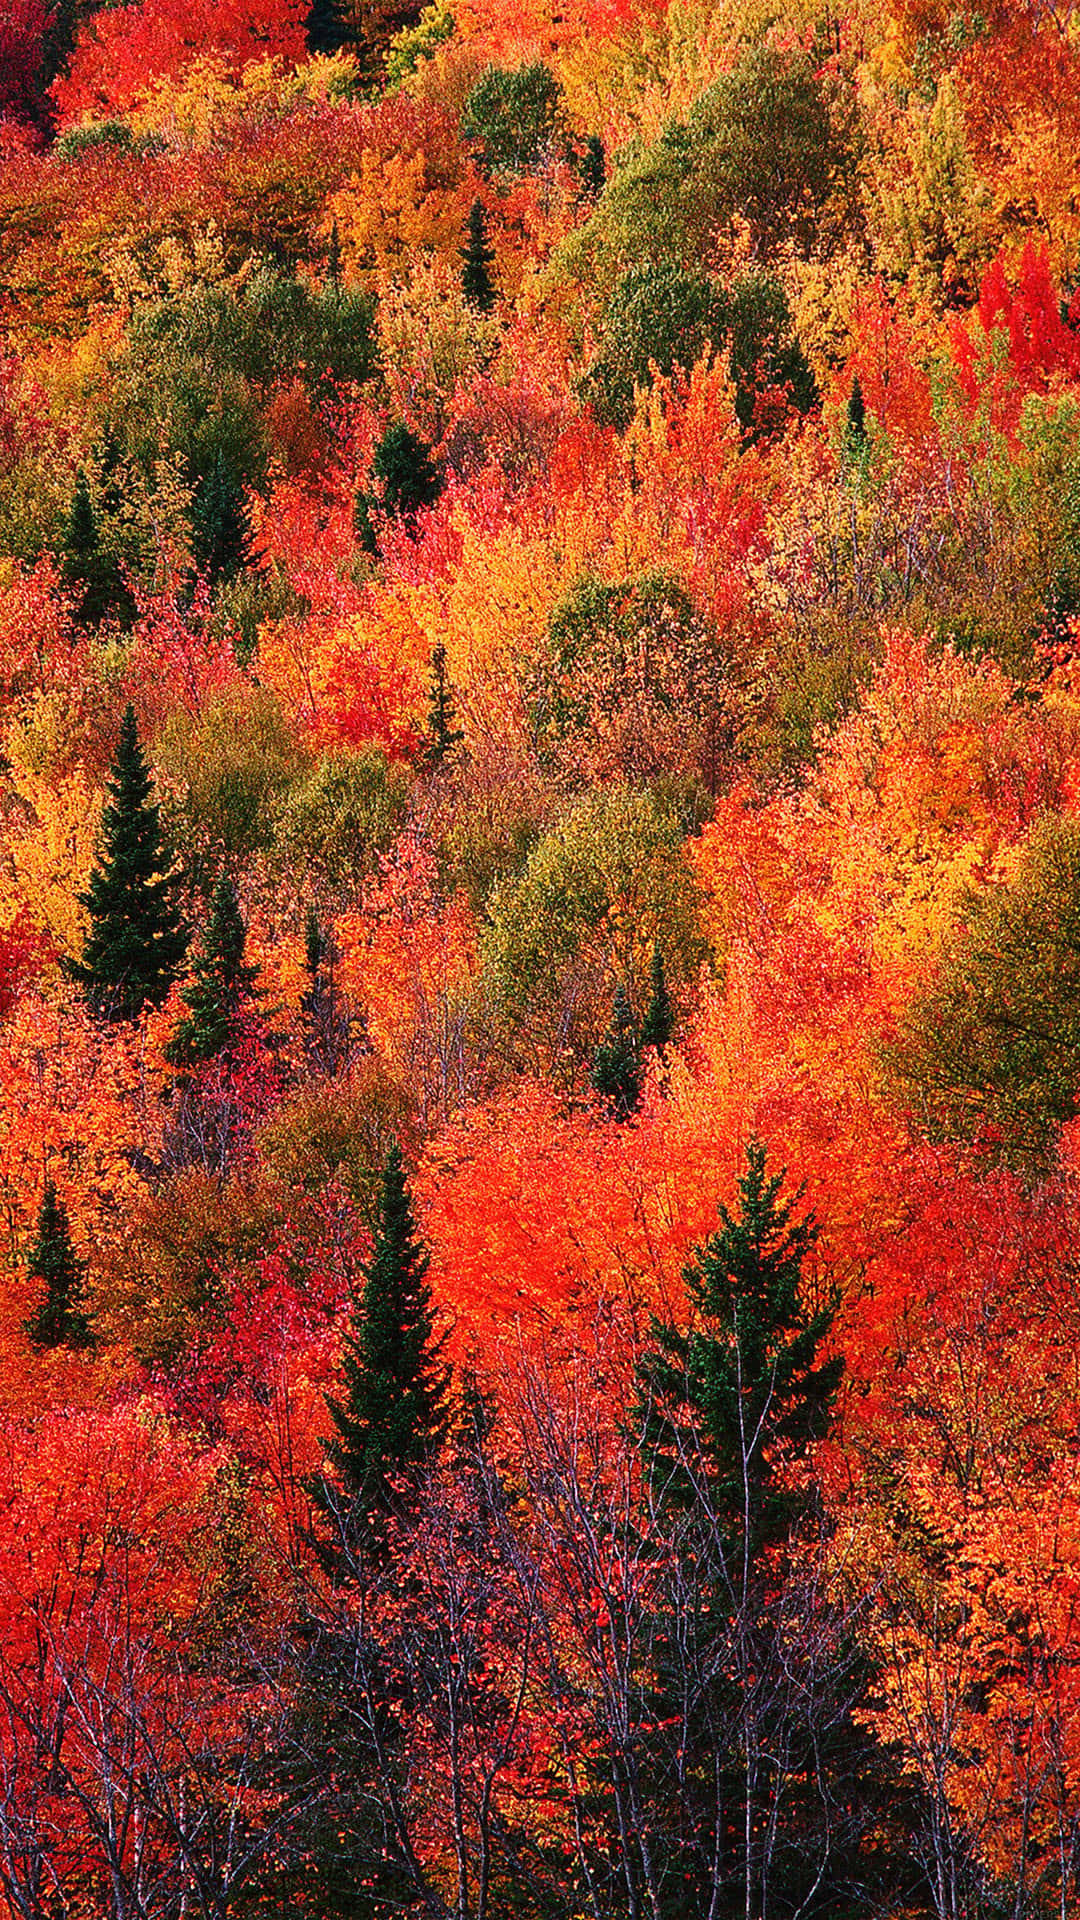 Caption: Vibrant Fall Trees in Scenic Landscape Wallpaper